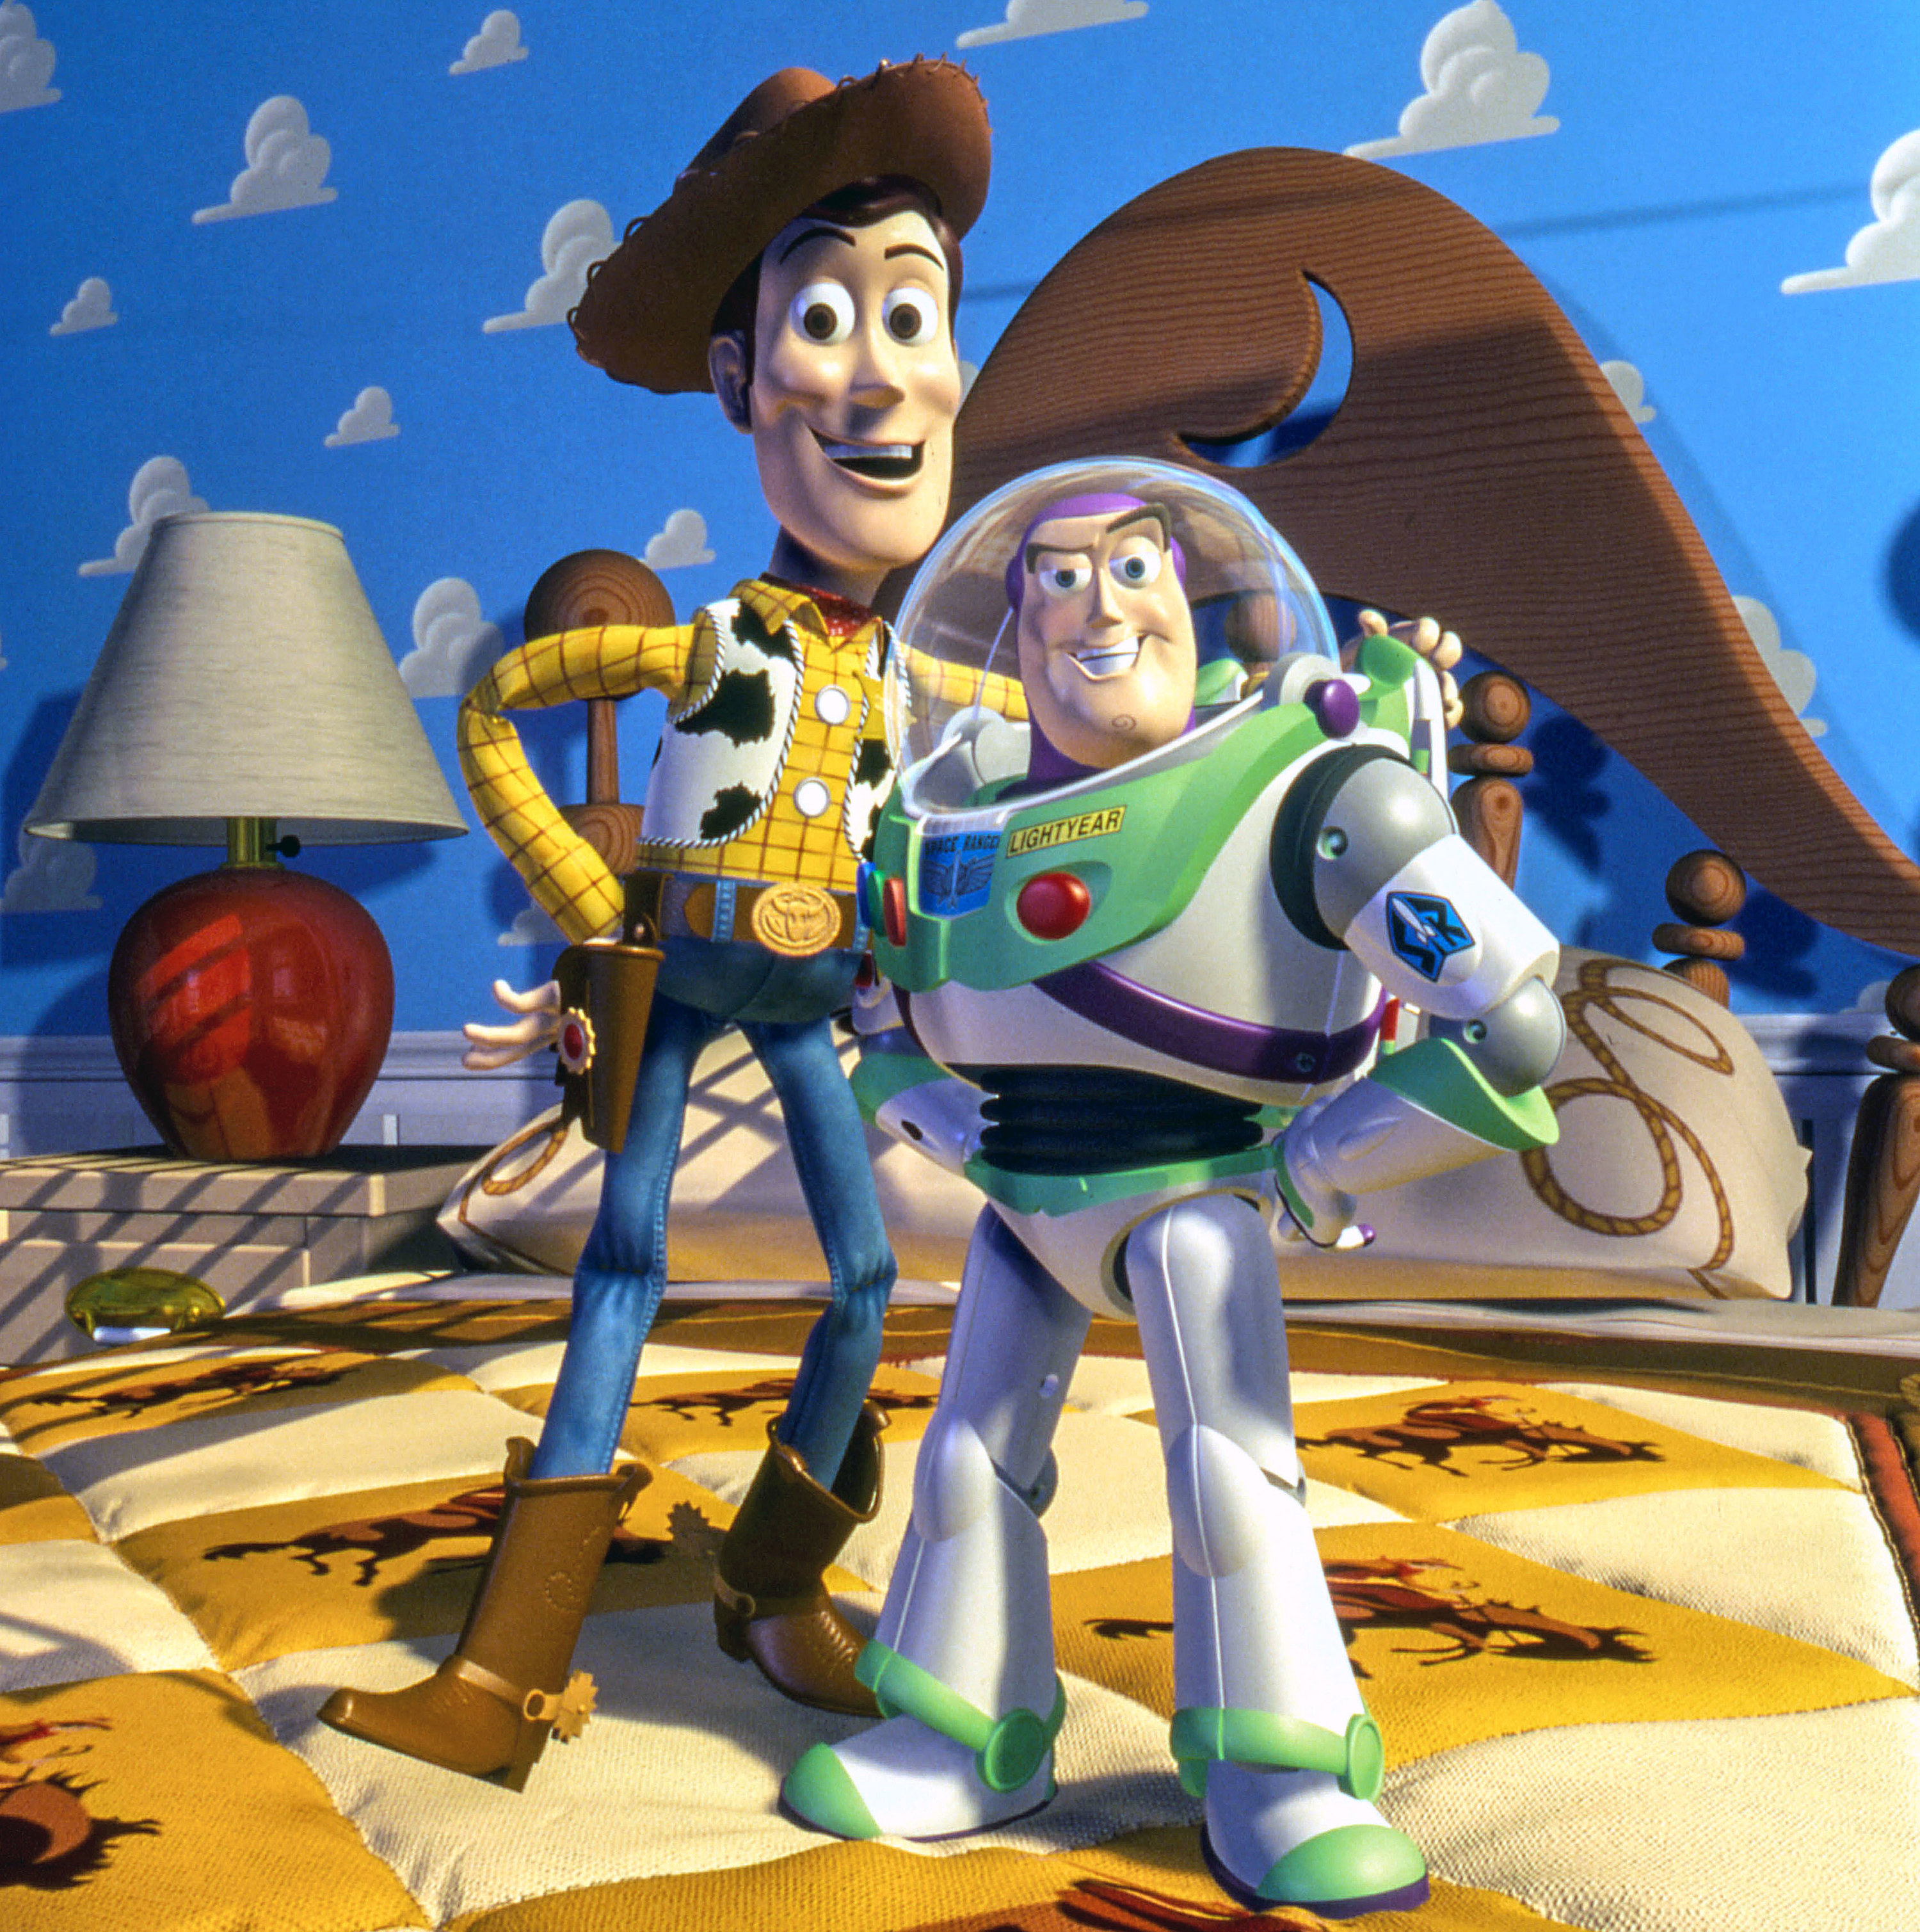 Here Are 10 Best Pixar Animated Movies According To Imdb 3 -Here Are 10 Best Pixar Animated Movies According To Imdb